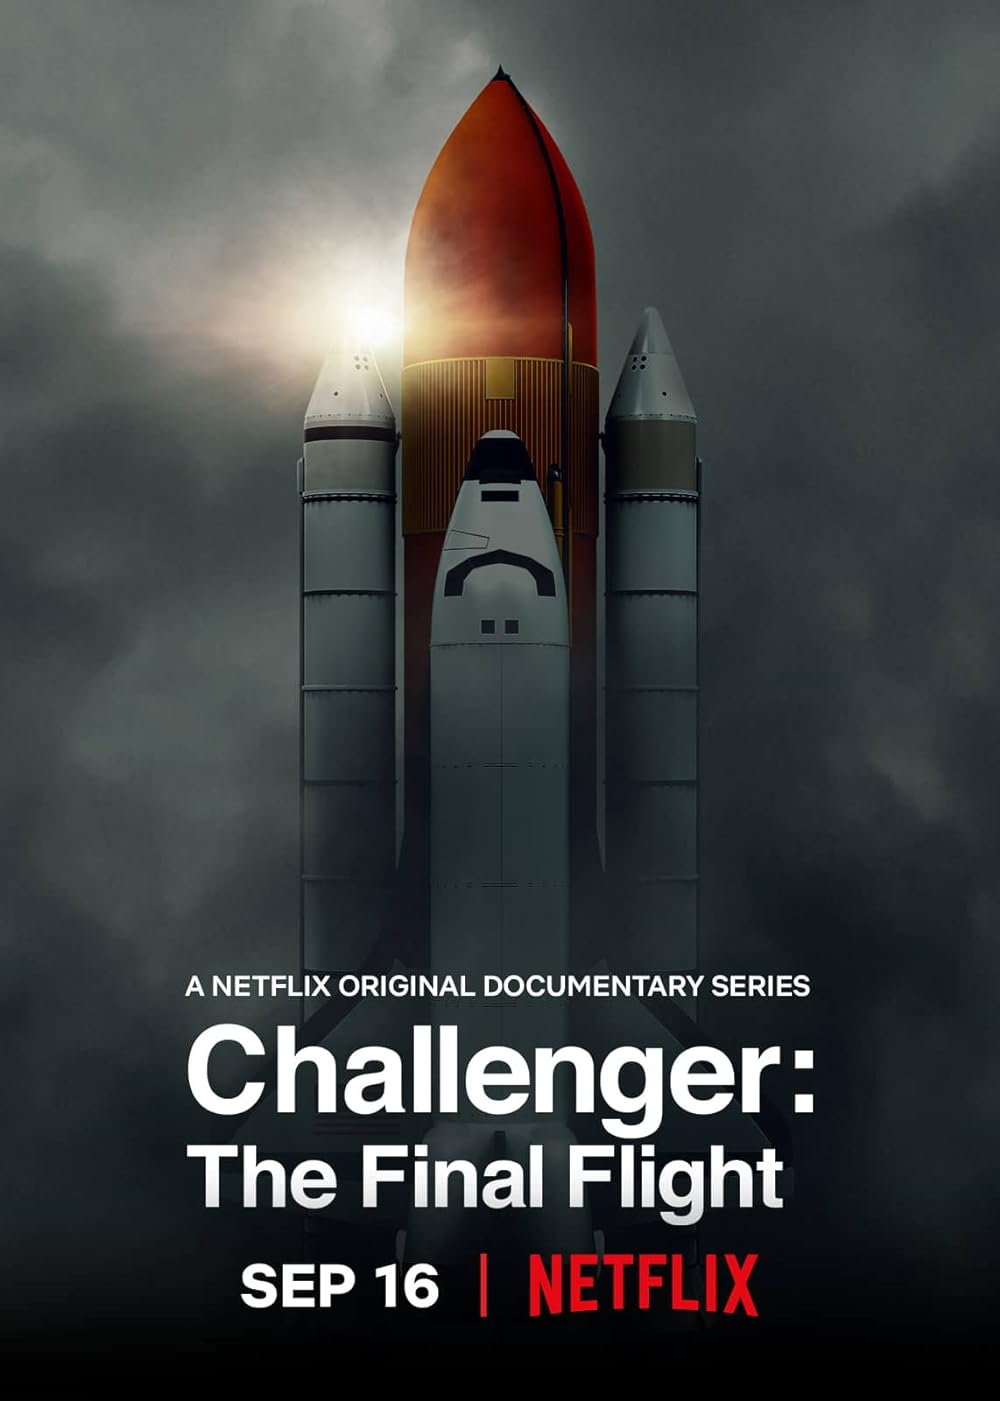 Challenger: The Final Flight (2020) S1 EP3 A Major Malfunction 640Kbps 23.976Fps 48Khz 5.1Ch DD+ NF E-AC3 Turkish Audio TAC